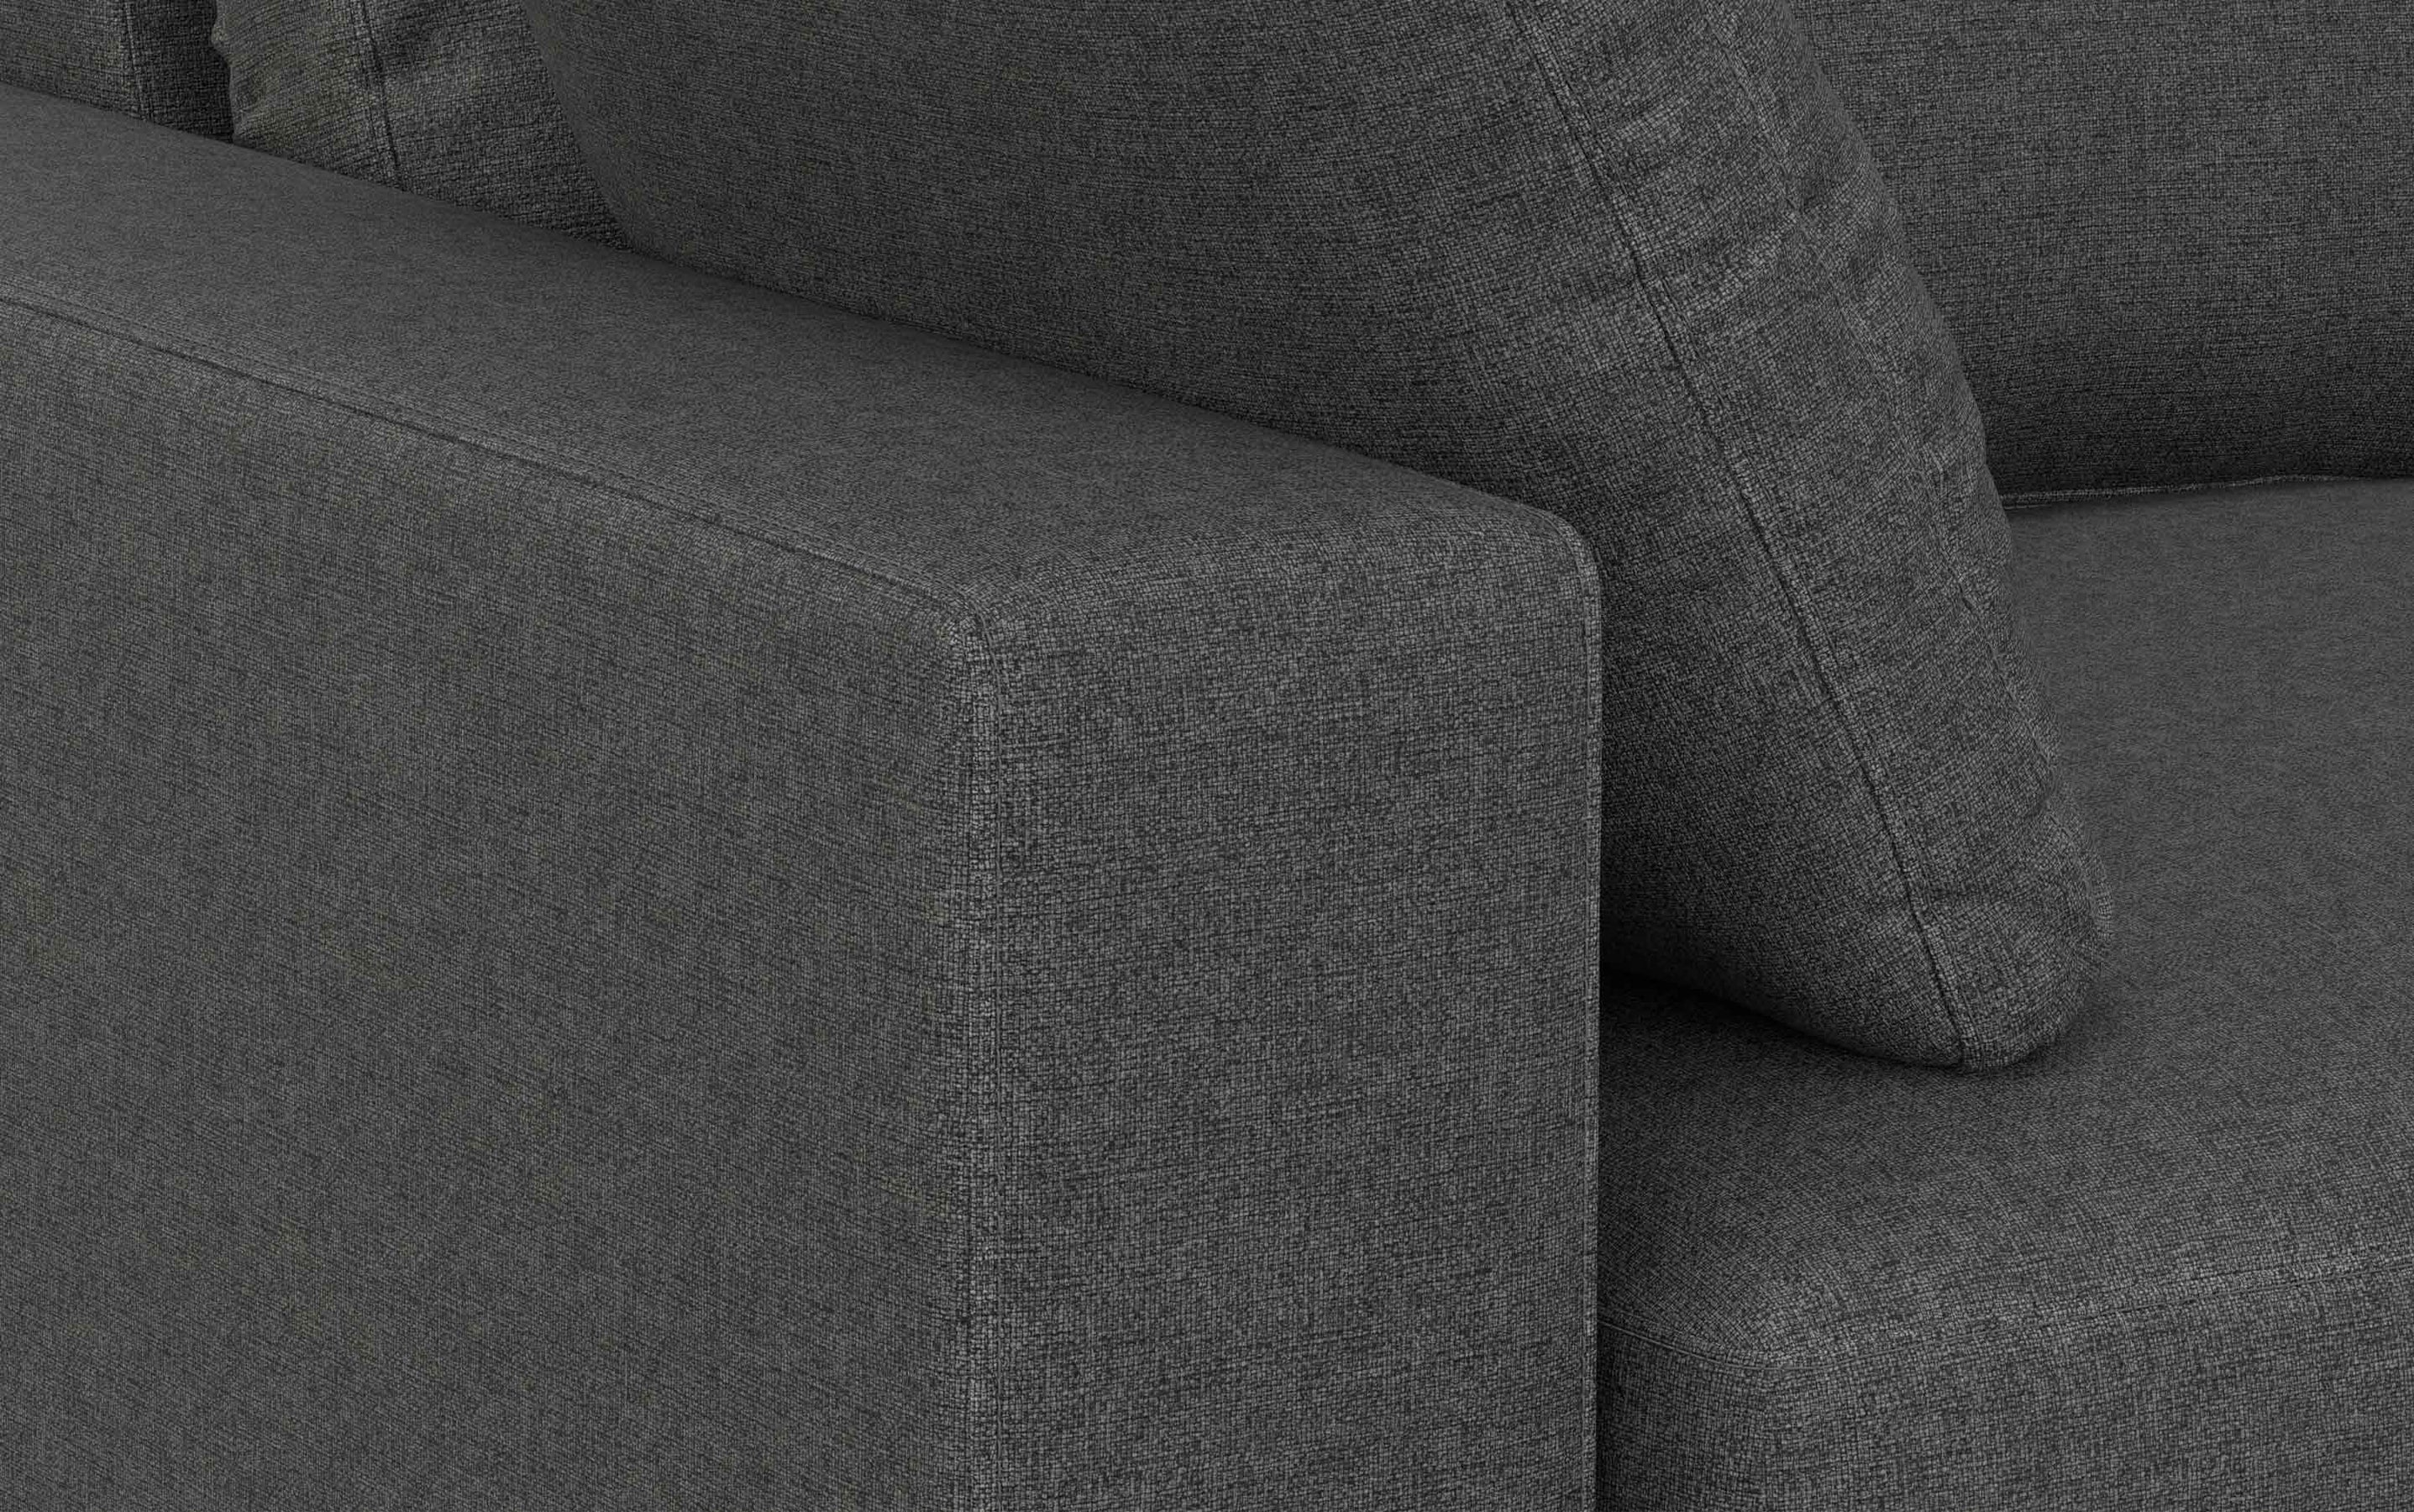 Pebble Grey Performance Fabric | Charlie 96 inch Deep Seater Sofa